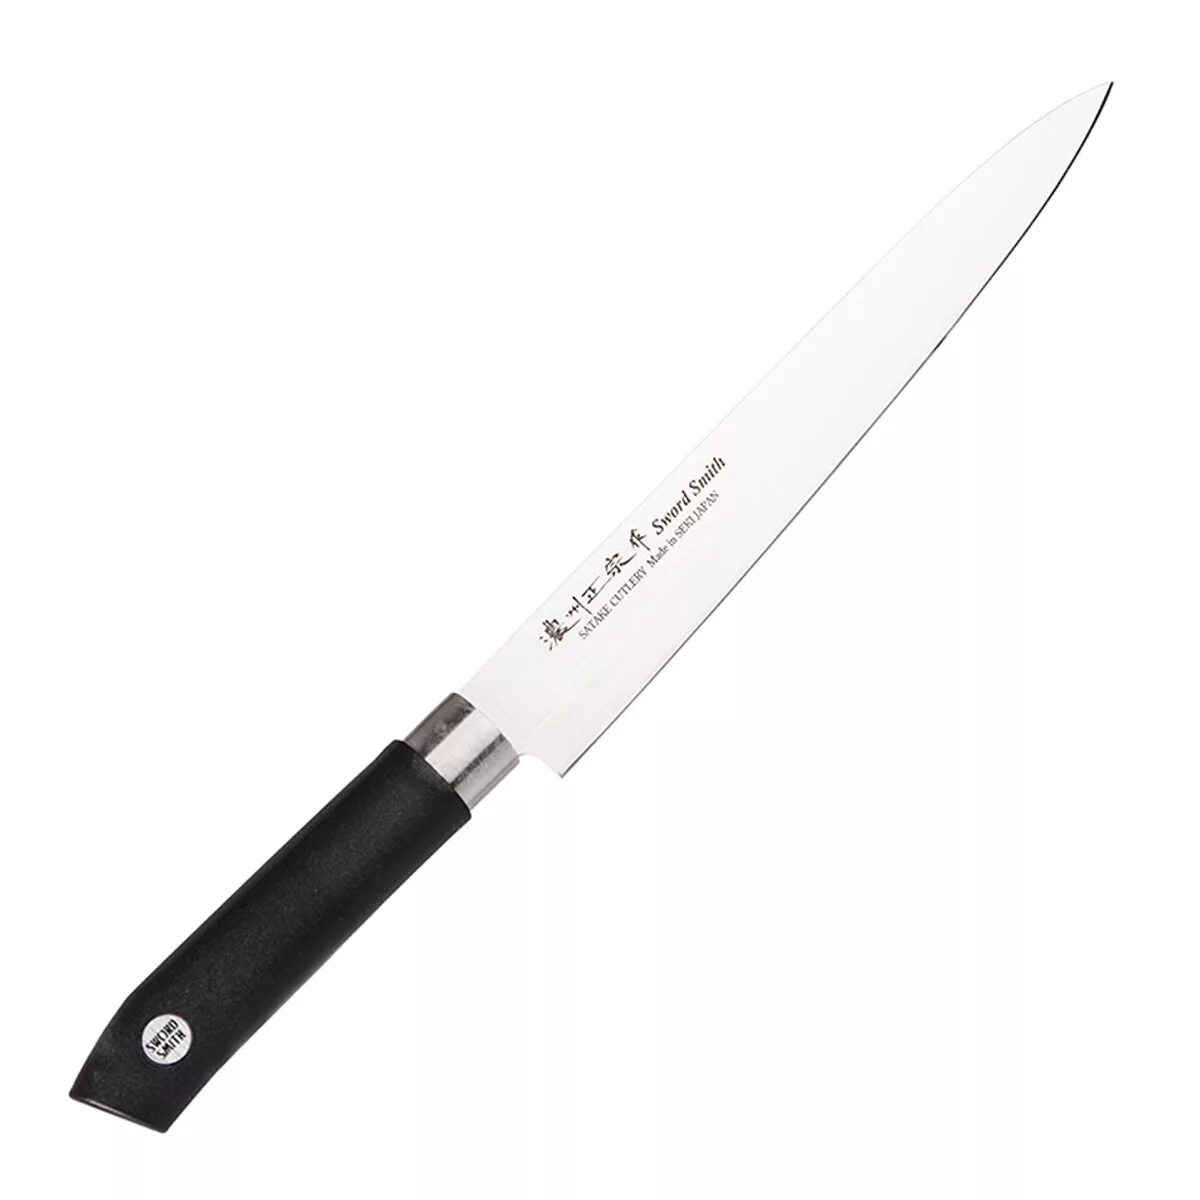 Японские кухонные ножи Satake. Satake Cutlery Sword Smith ножи. Нож Masahiro шеф 18. Нож филейный Янагиба японский производитель Масахиро катлери.